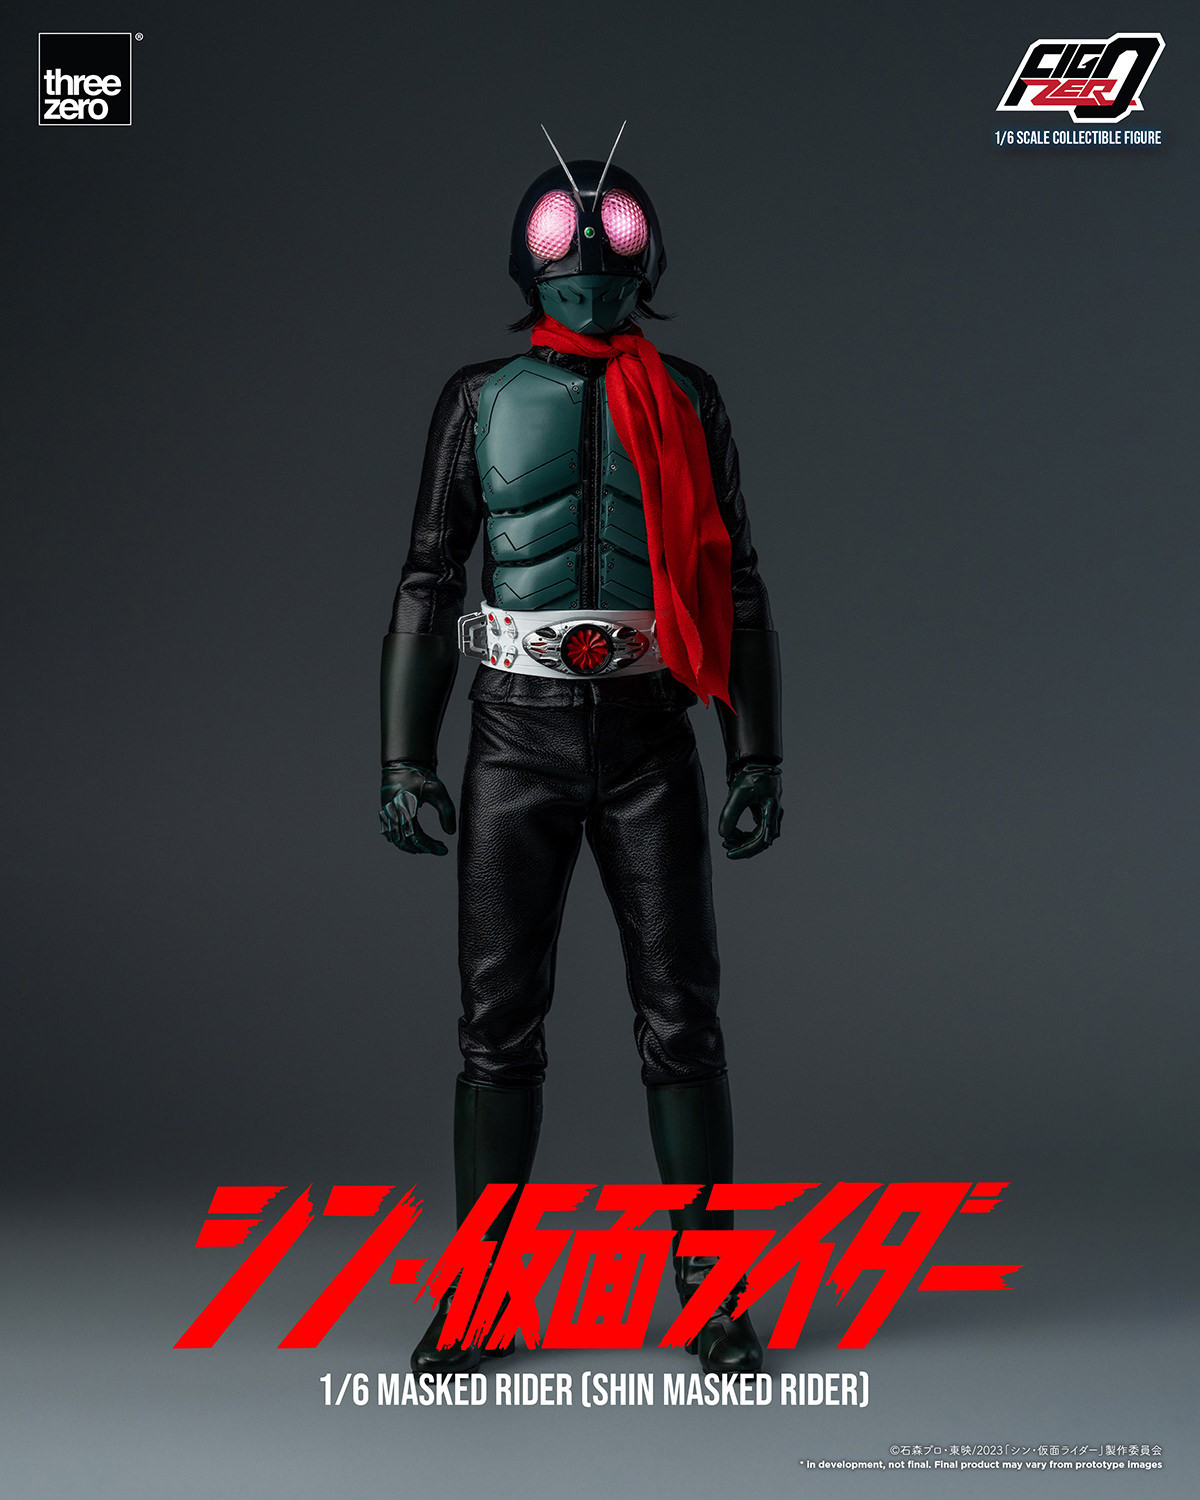 Shin Masked Rider (Prototype Shown) View 6